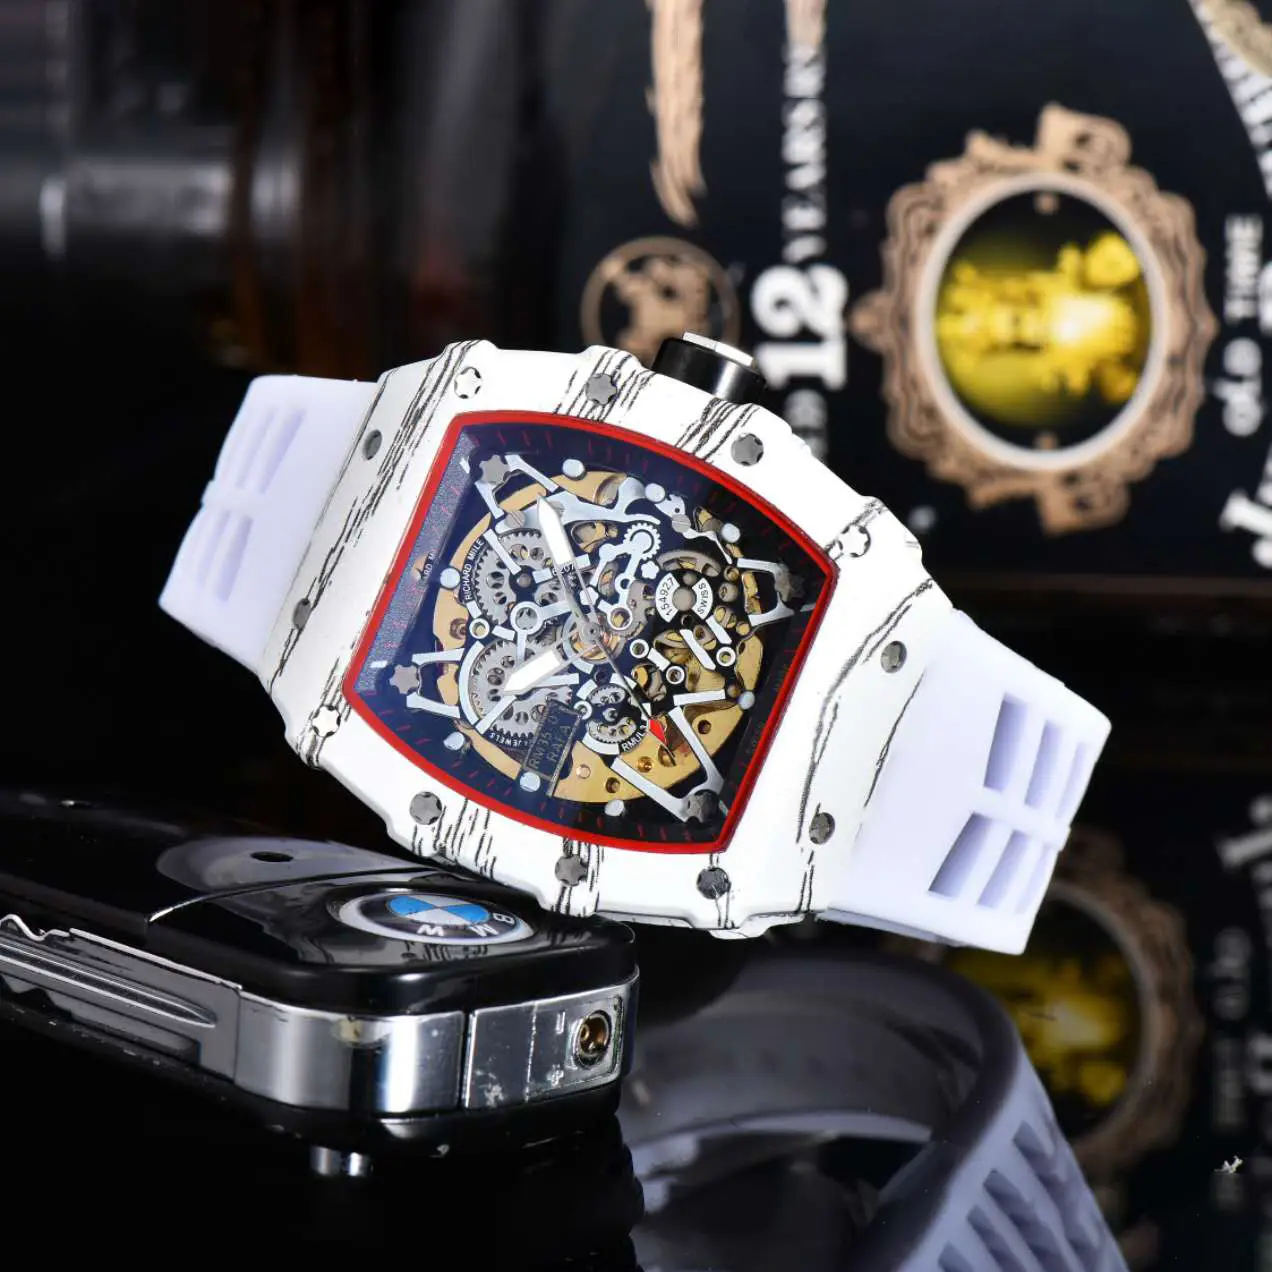 2020 new fashion mechanical watch hollow with calendar men's wood grain watch men's watch